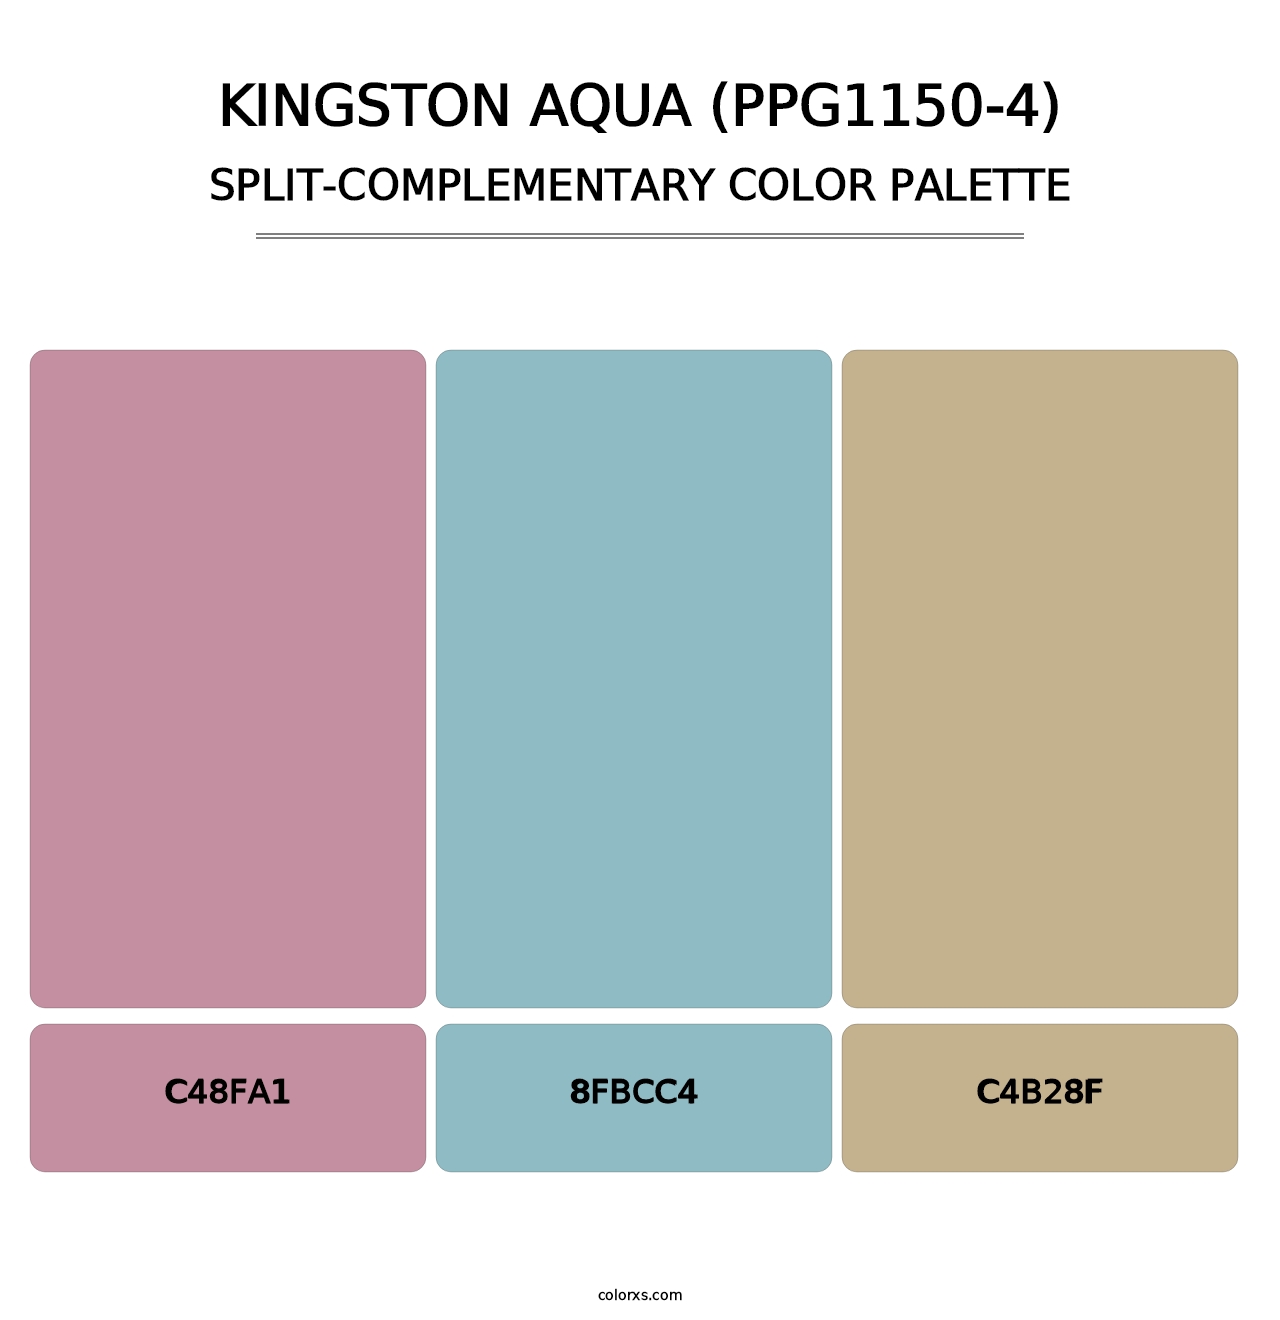 Kingston Aqua (PPG1150-4) - Split-Complementary Color Palette